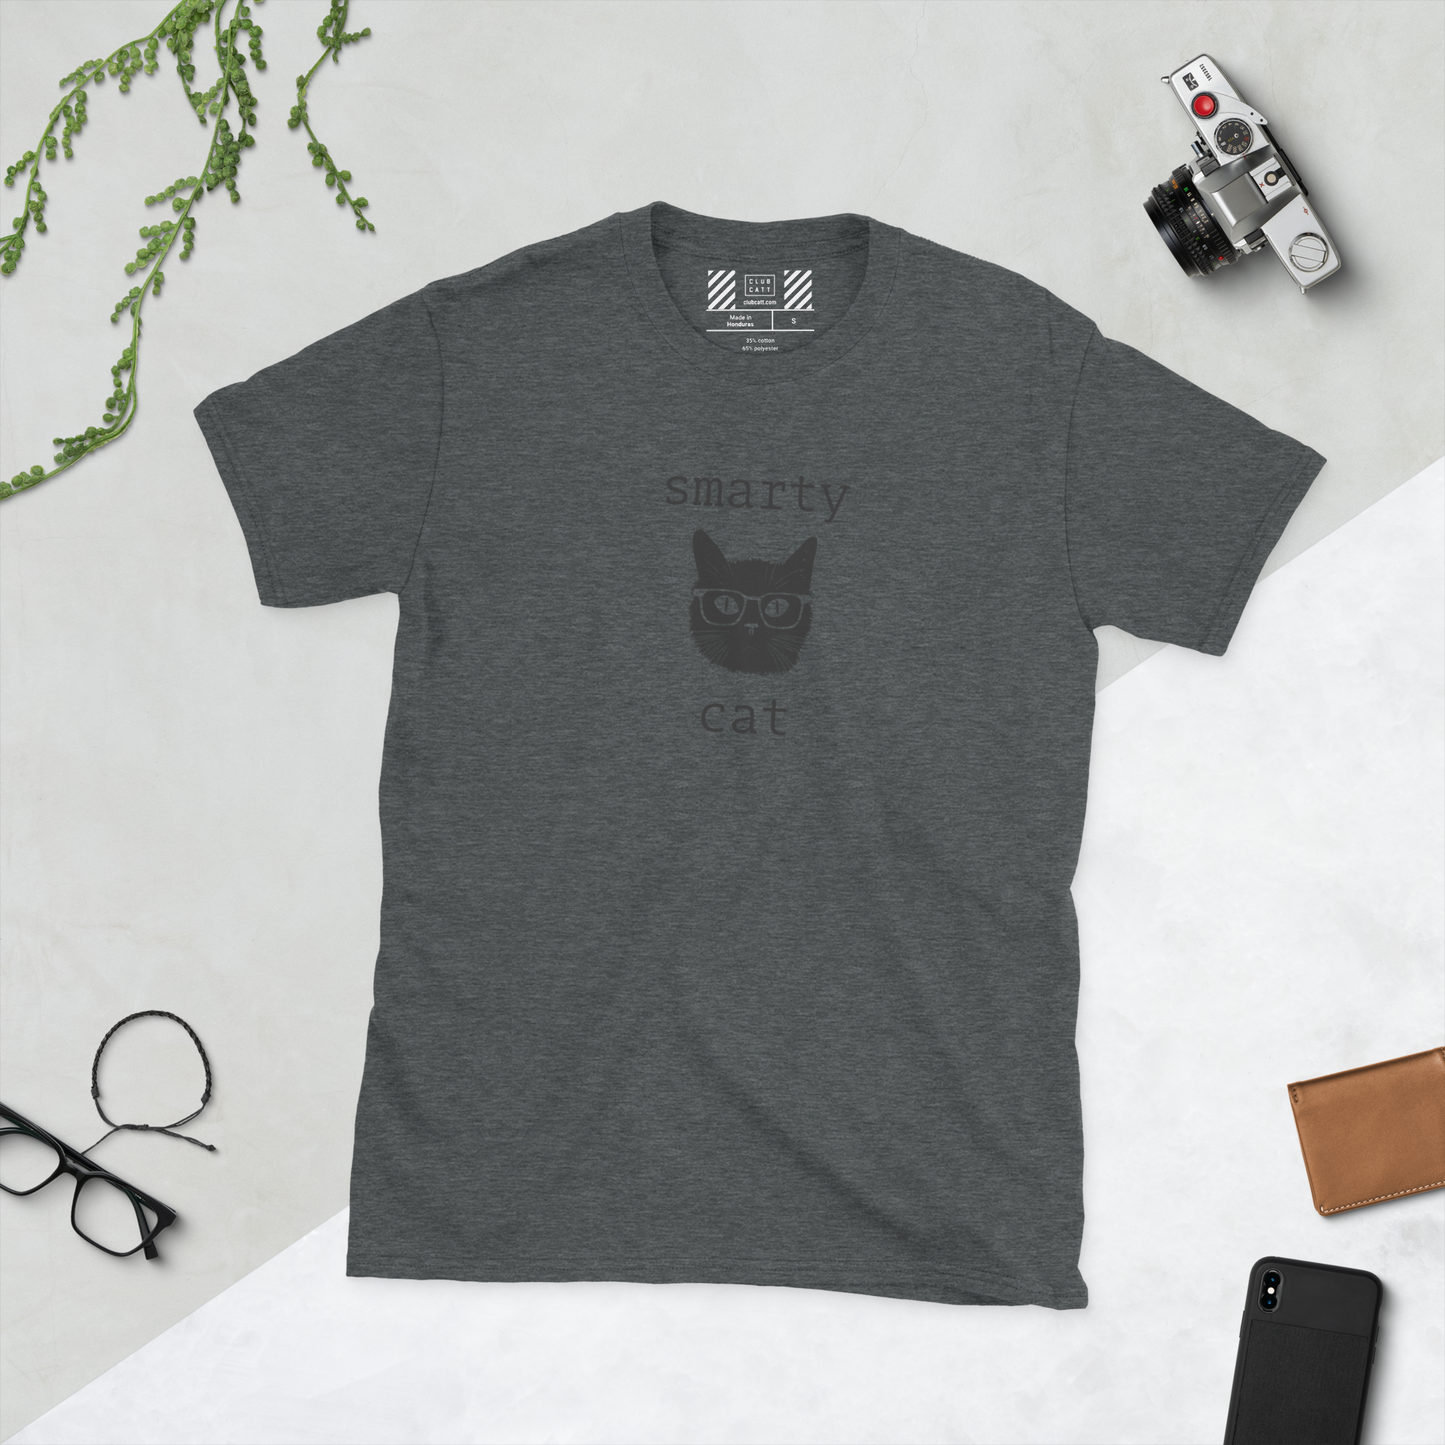 Smarty Cat T-Shirt